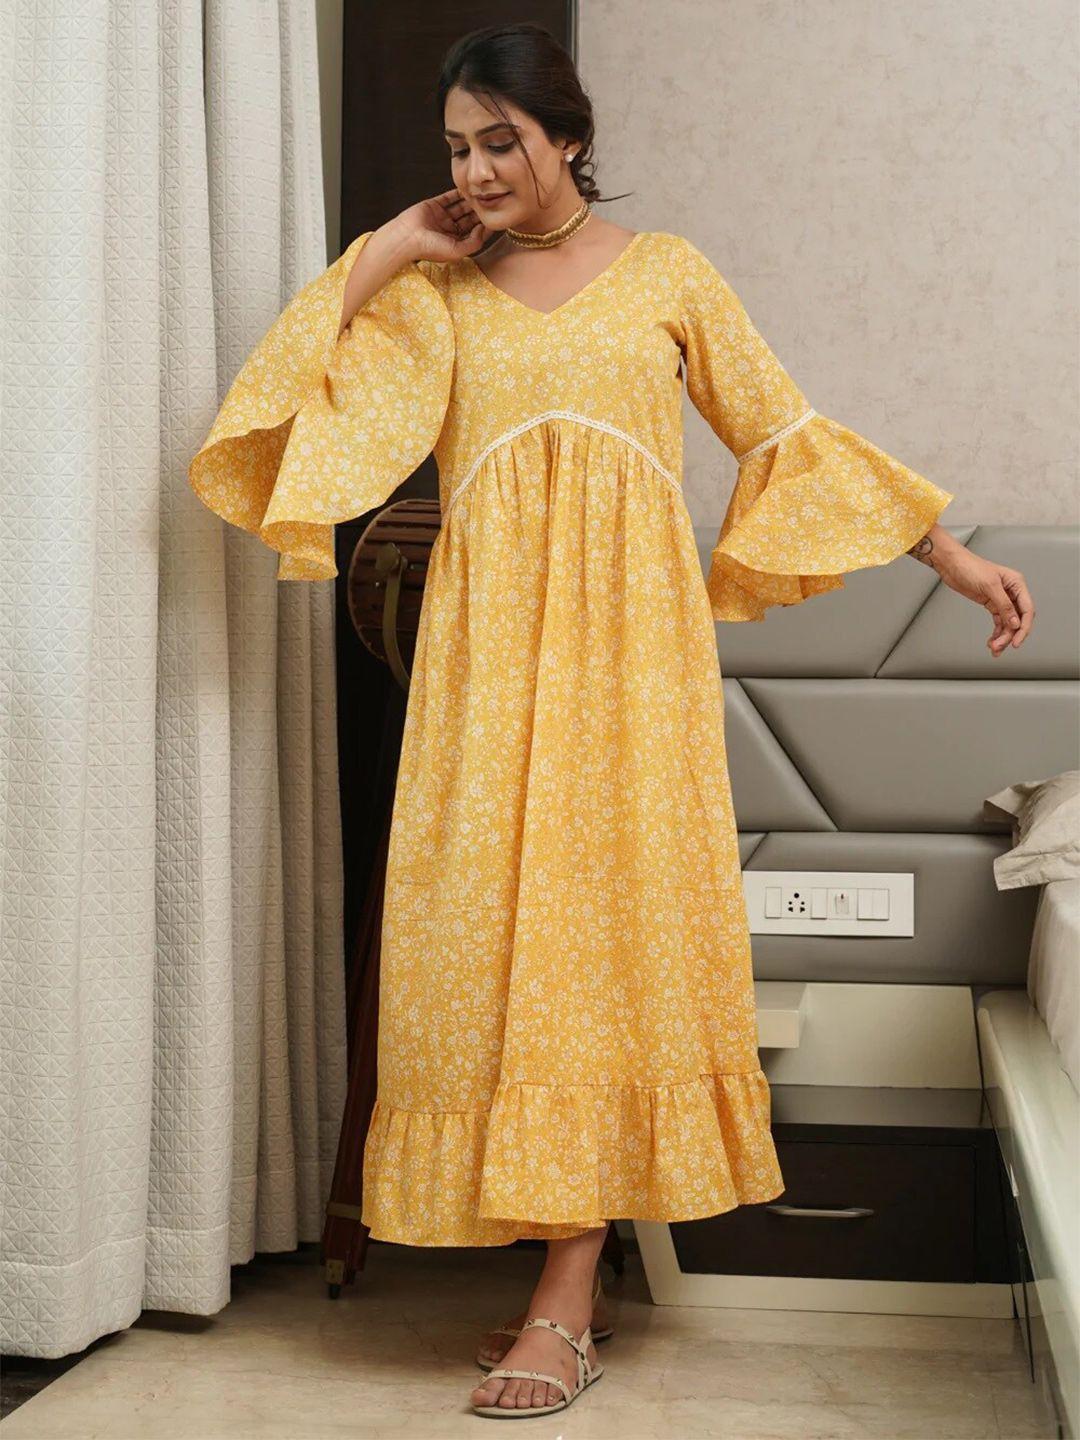 nangalia-ruchira-women-floral-printed-cotton-empire-maxi-dress